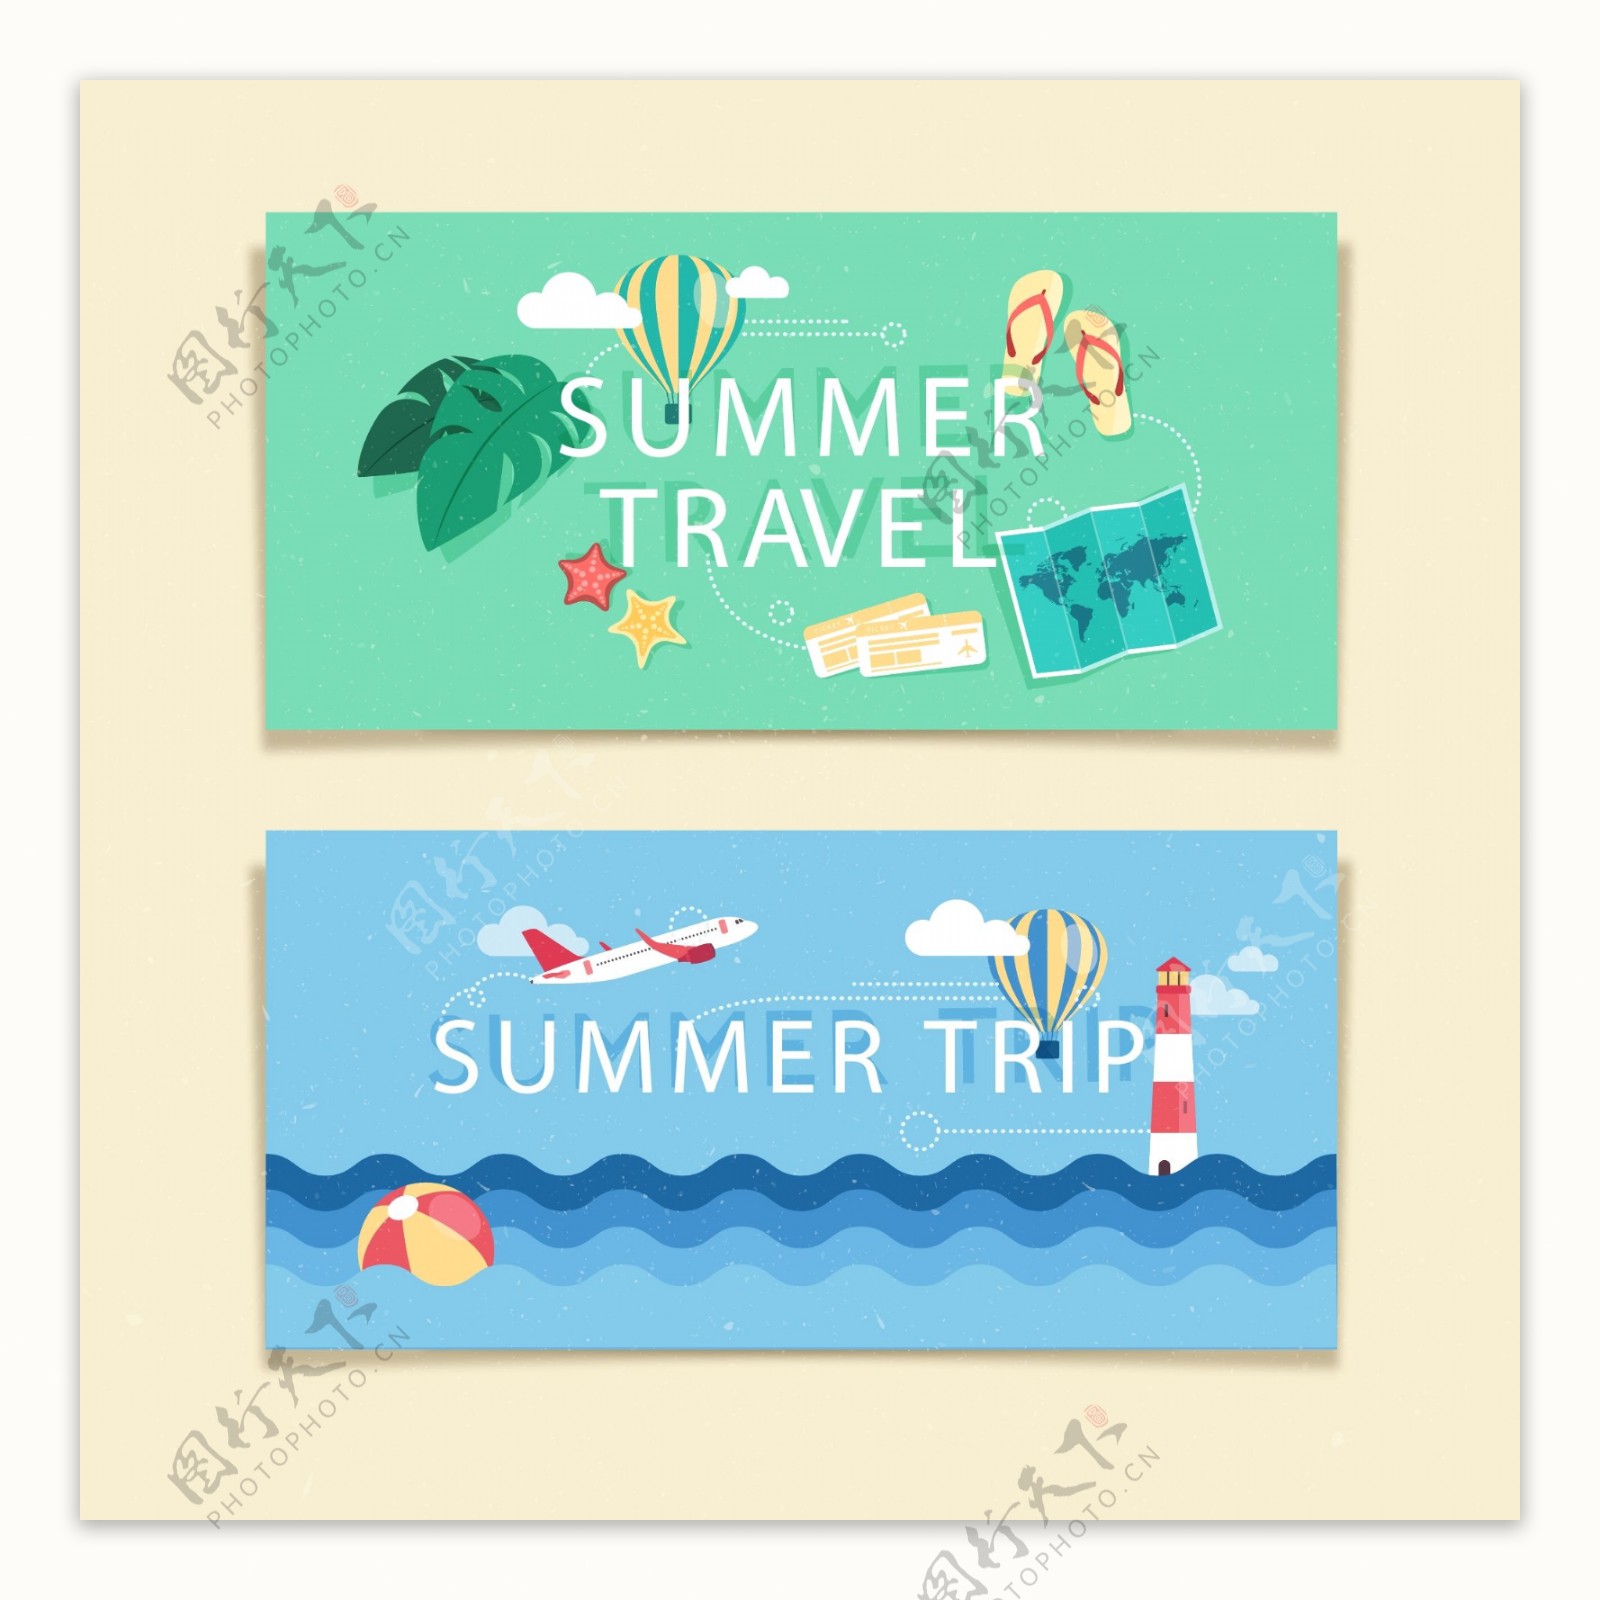 2款夏季旅游banner设计